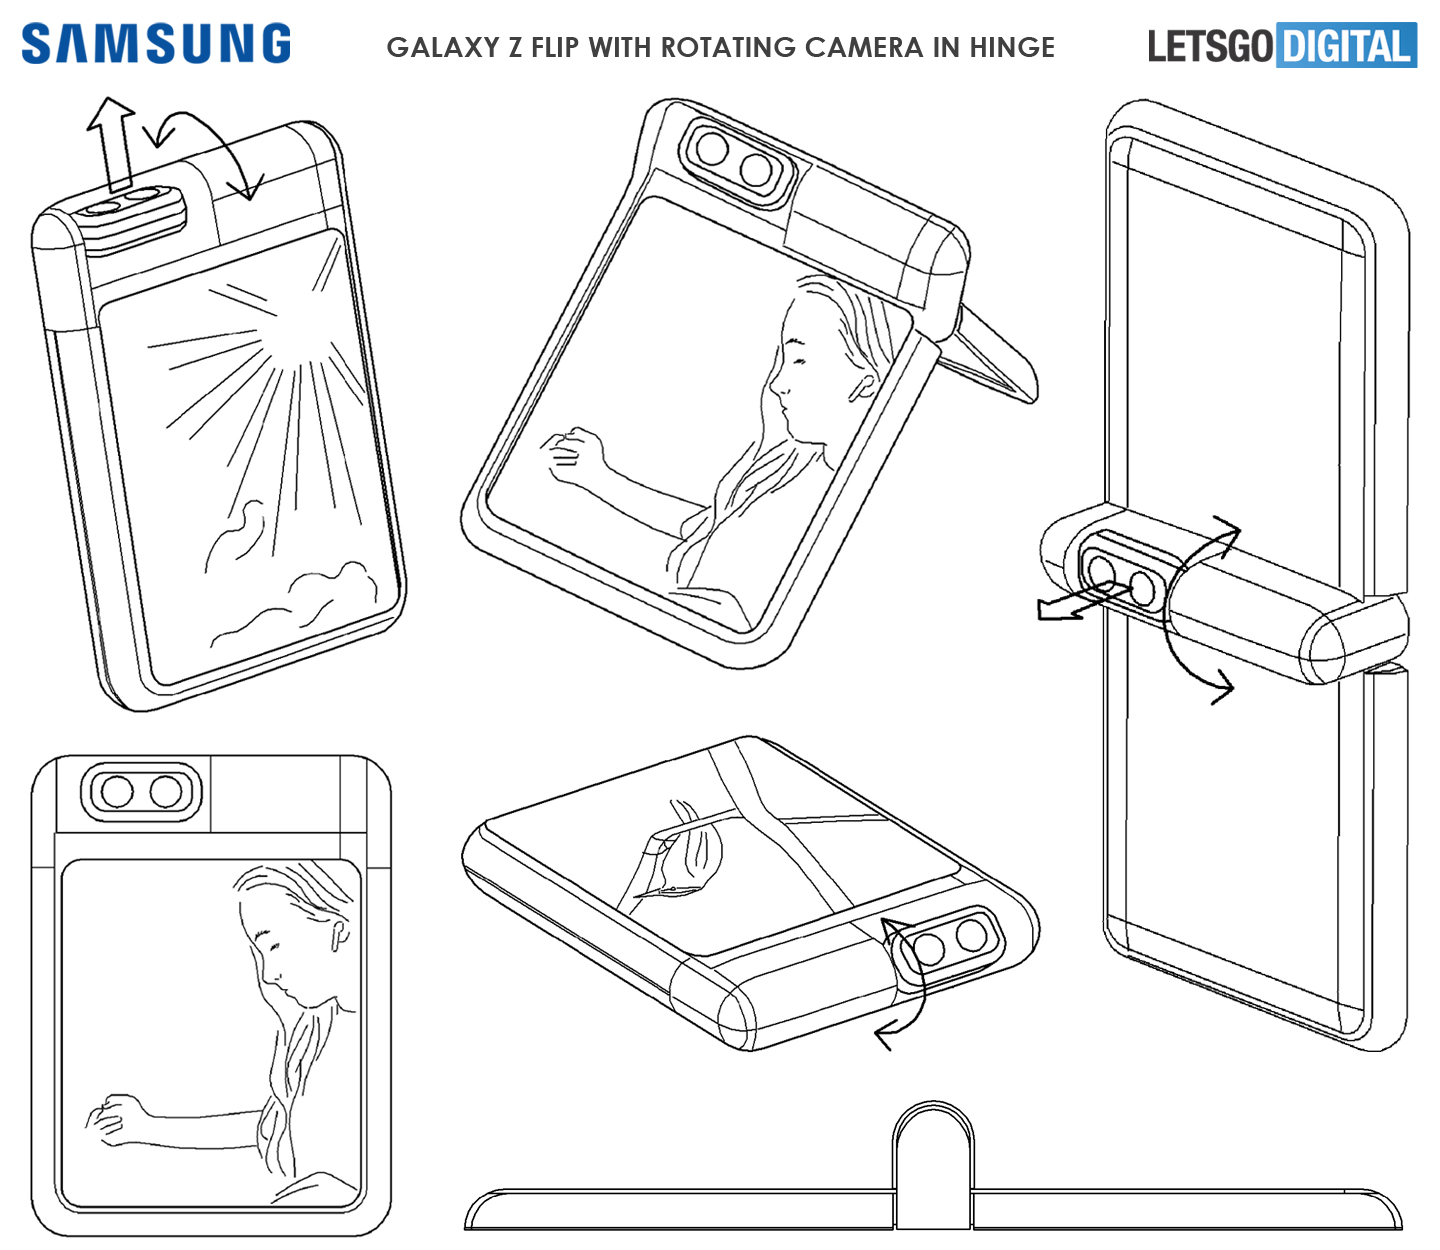 Samsung Z Flip camera hinge